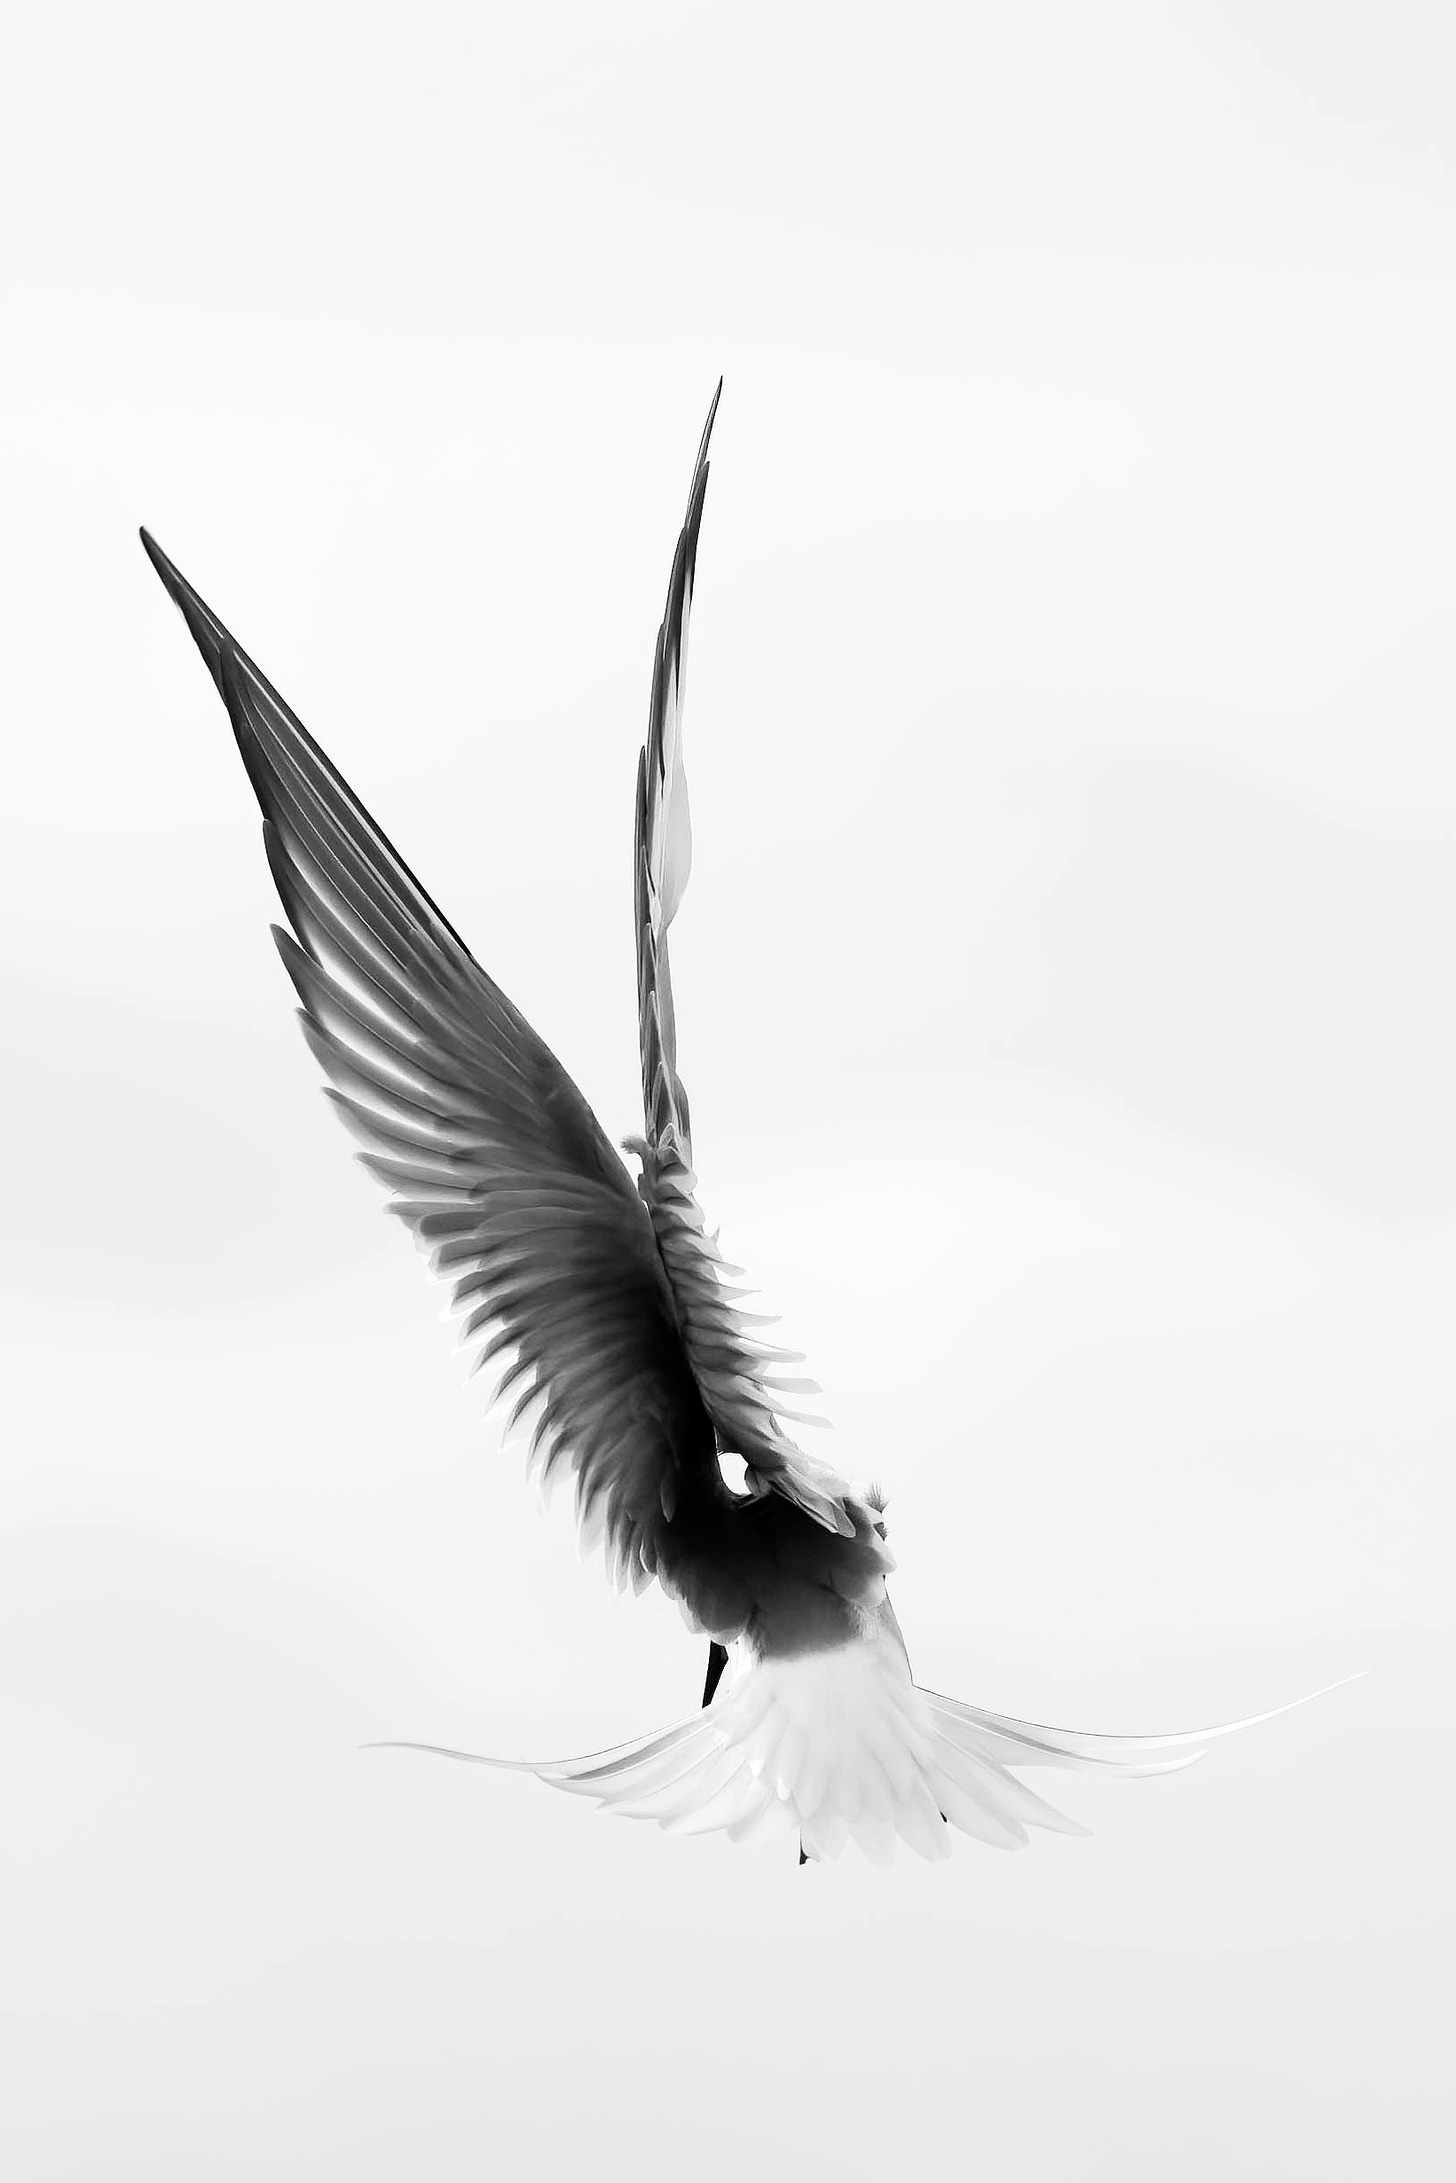 Arctoc tern in flight